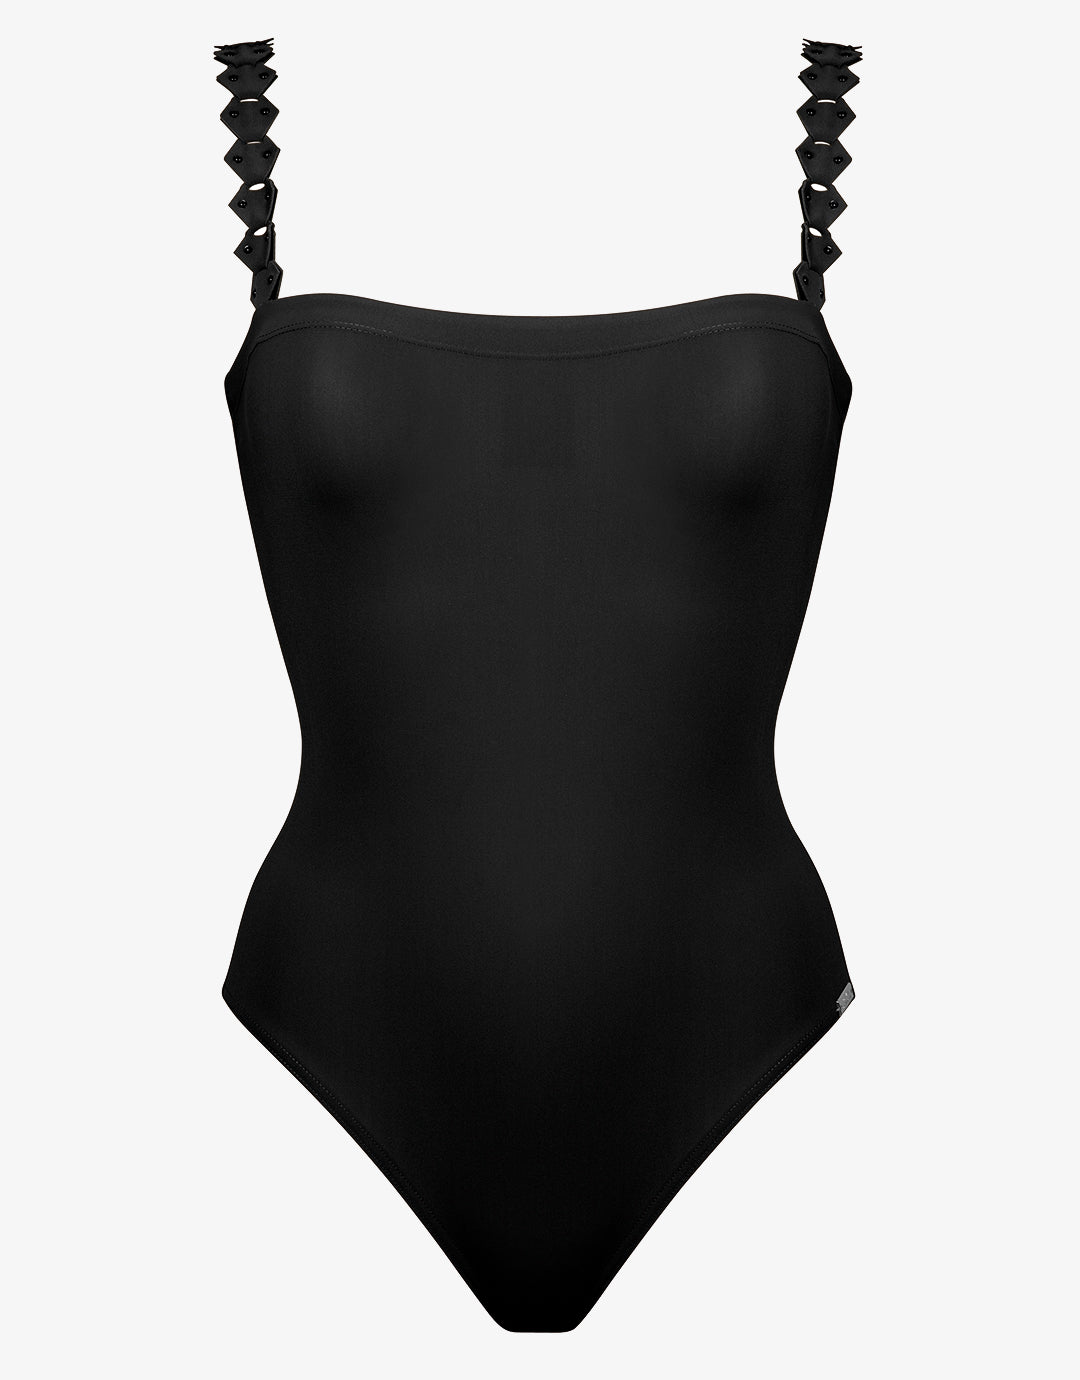 Softline Bandeau Swimsuit - Black - Simply Beach UK